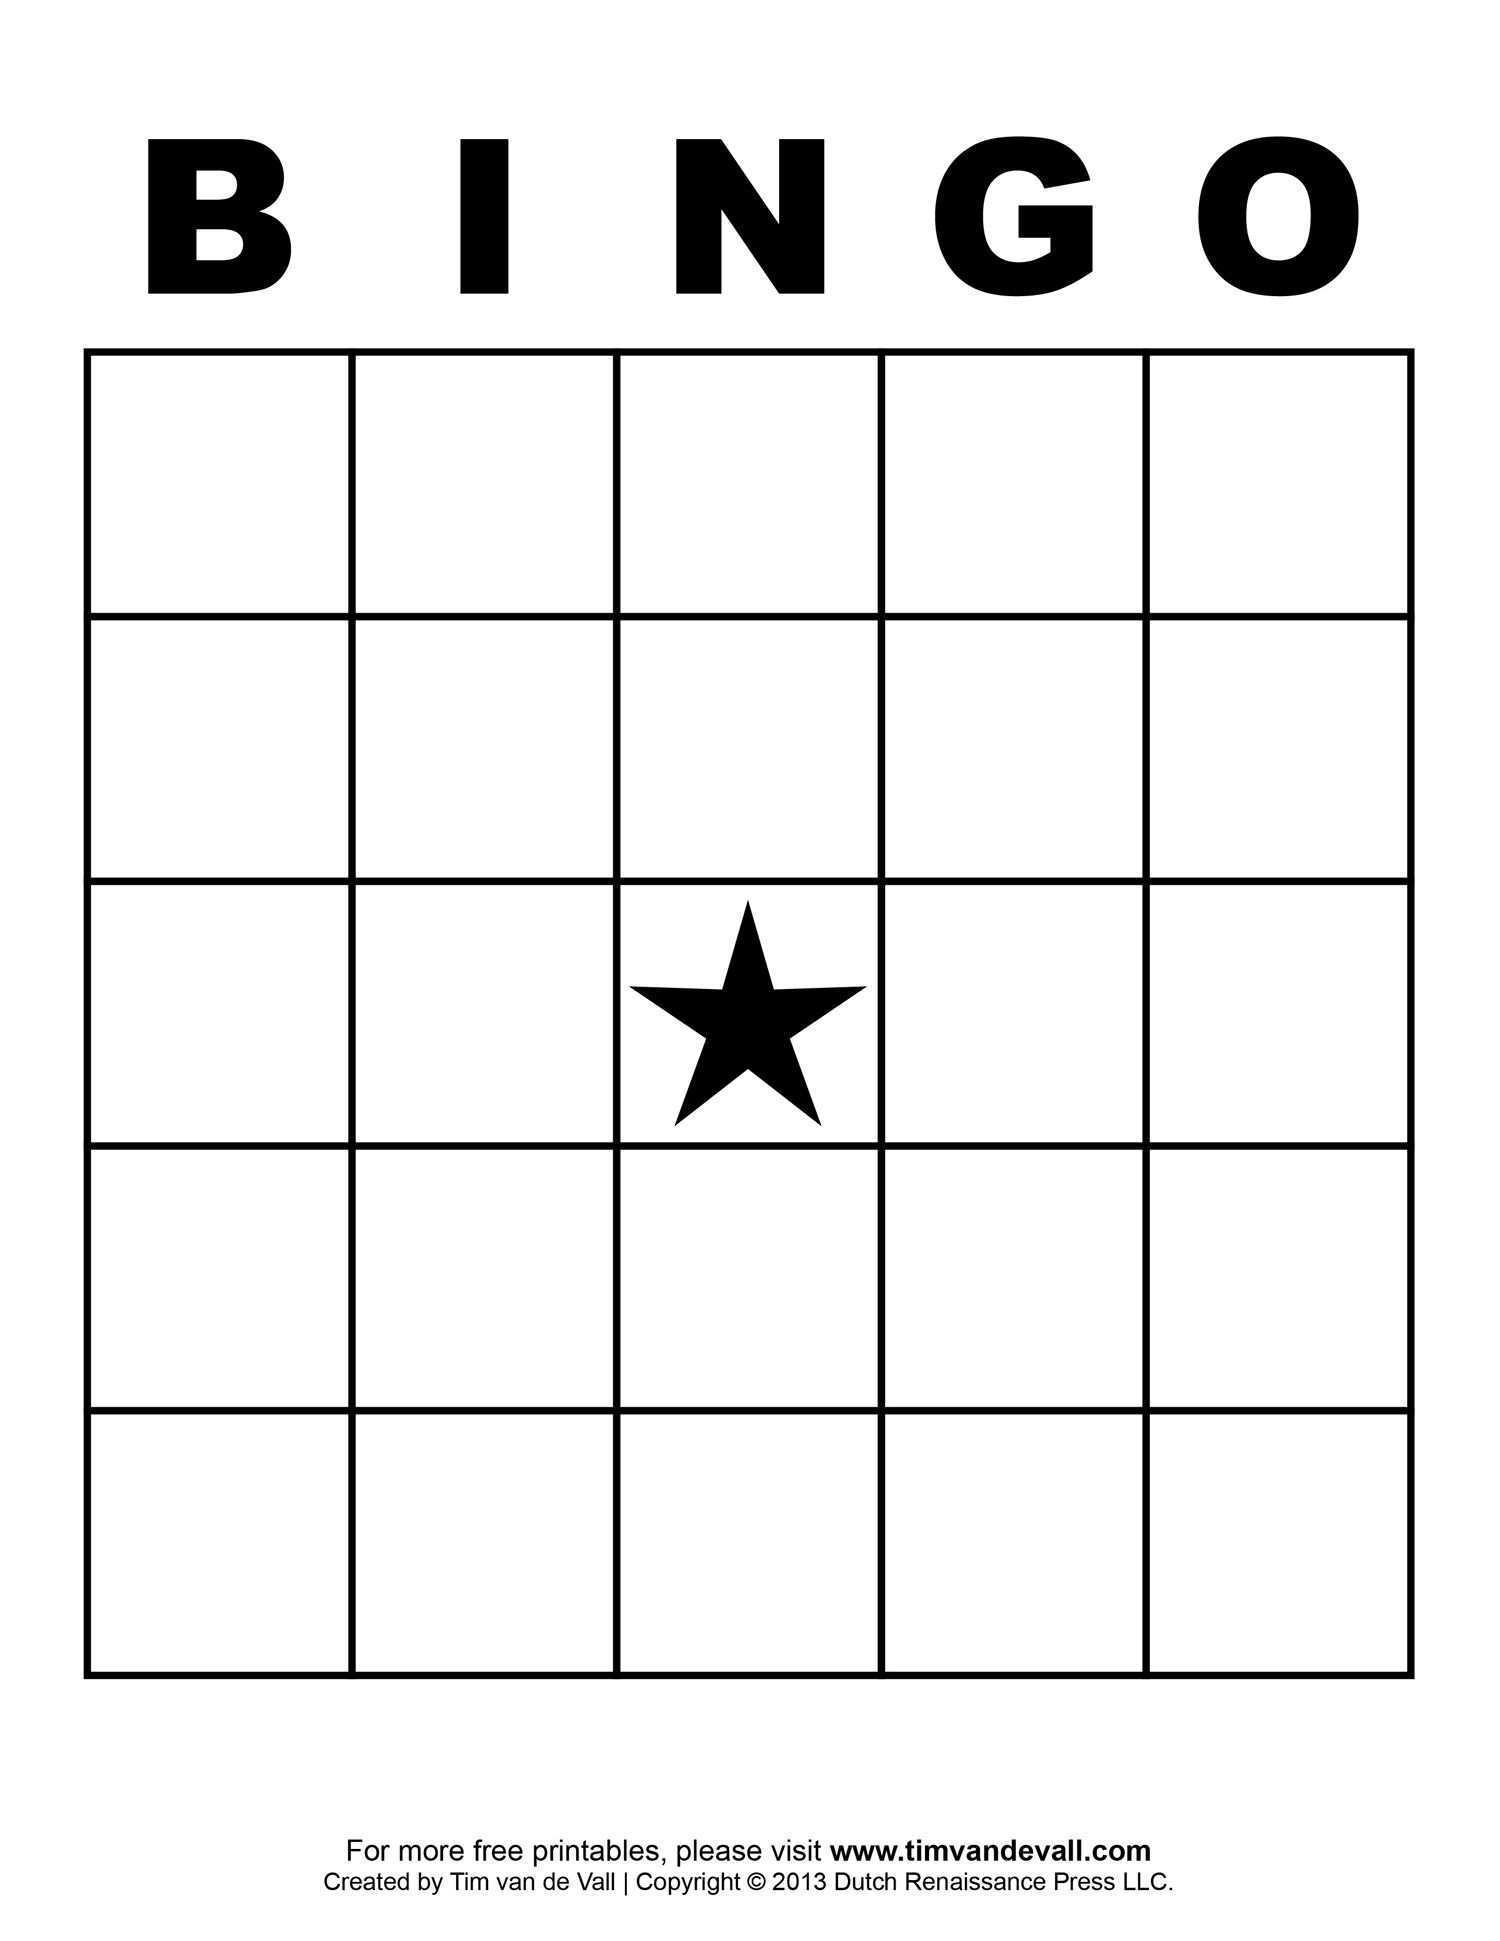 15-adding-bingo-card-template-5x5-now-by-bingo-card-template-5x5